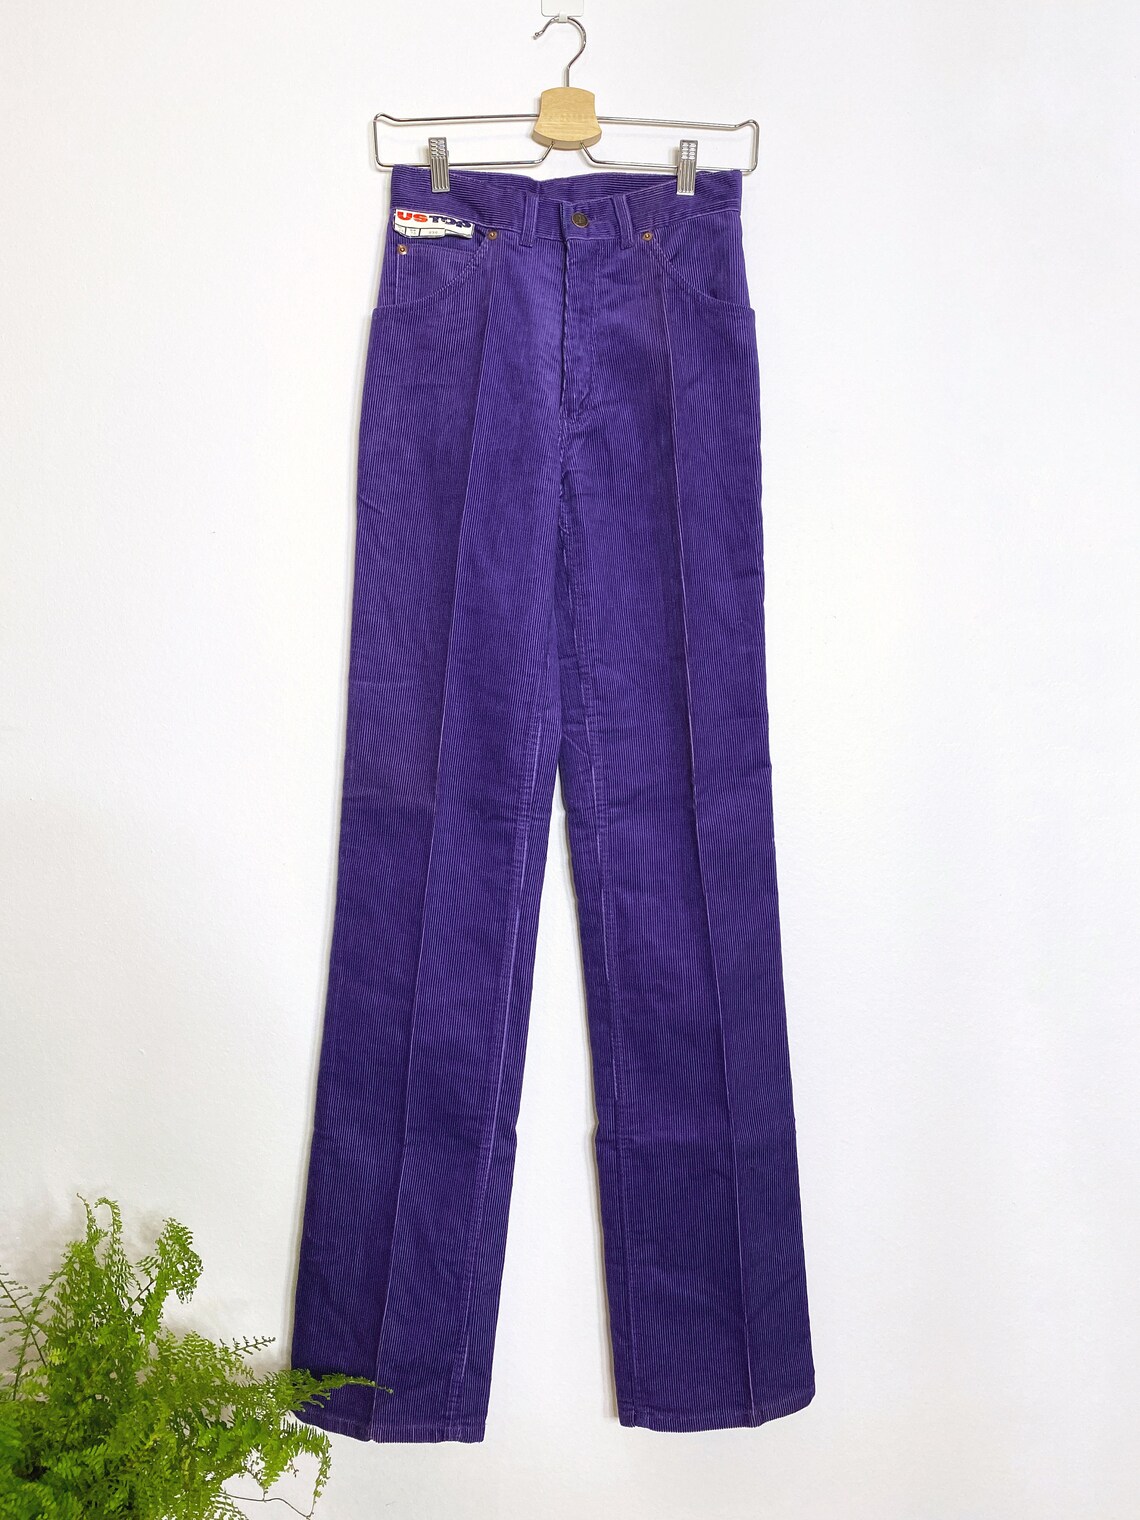 Vintage 80's corduroy pants USTOP 939 Purple velvet pants | Etsy